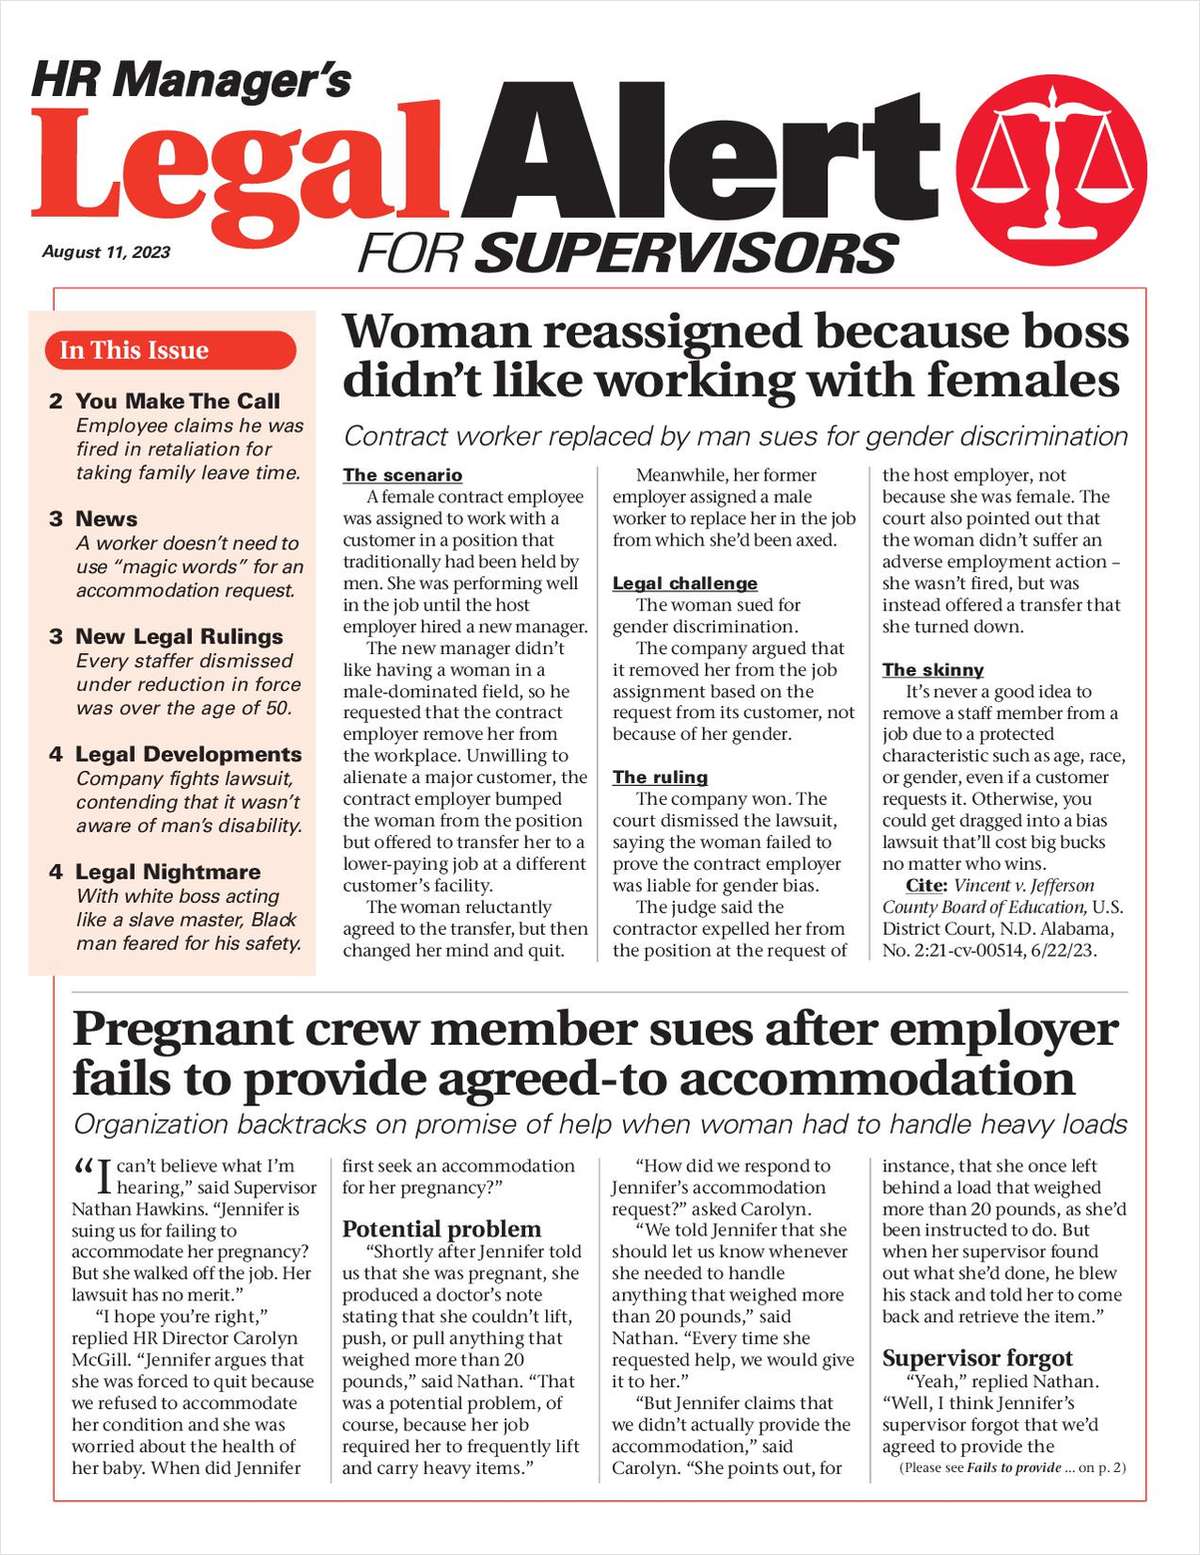 HR Manager's Legal Alert for Supervisors Newsletter: August 11 Edition